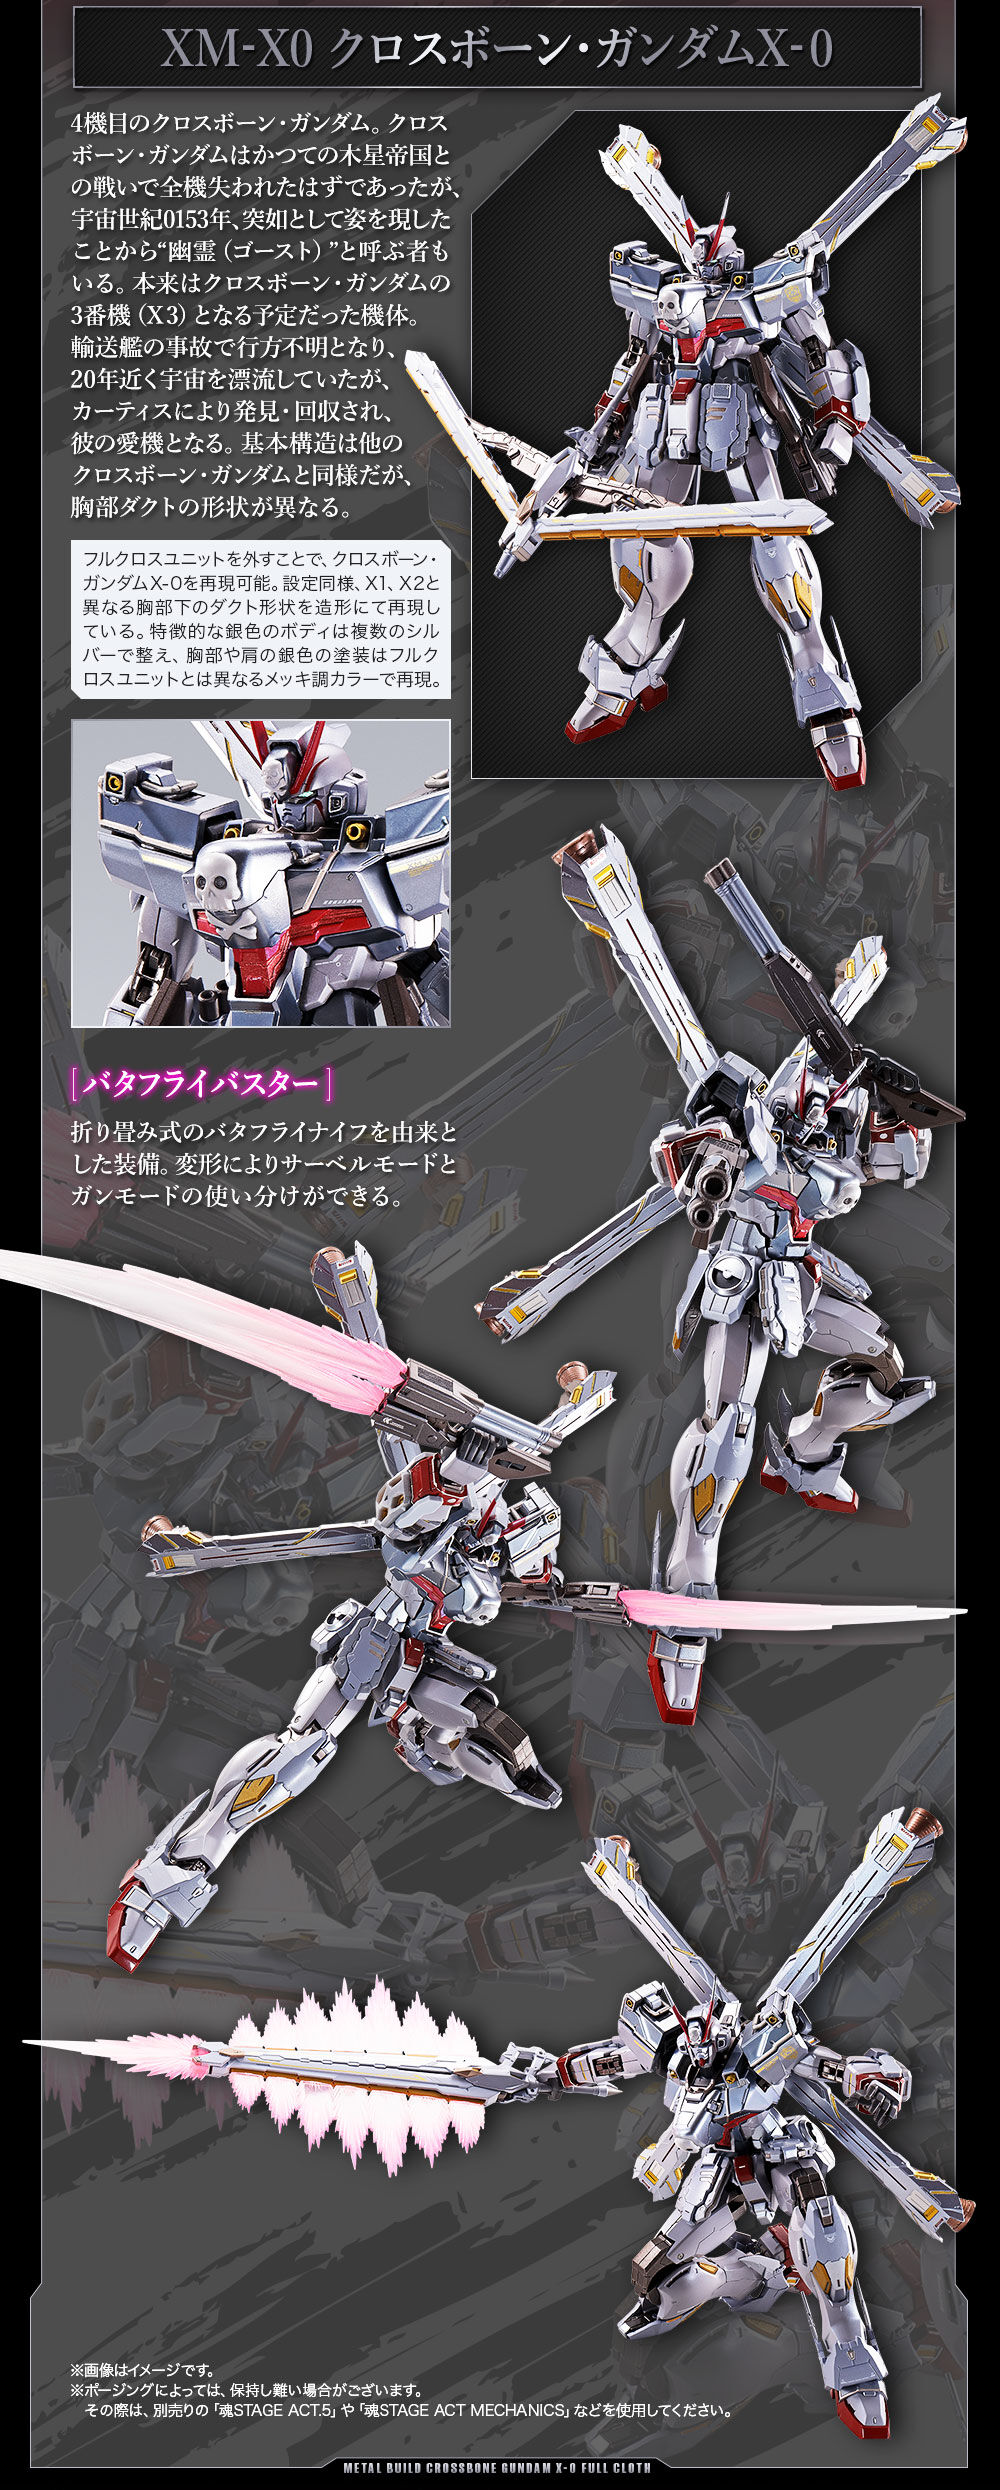 Metal Build XM-X0(F97) Crossbone Gundam X-0 Full Cloth